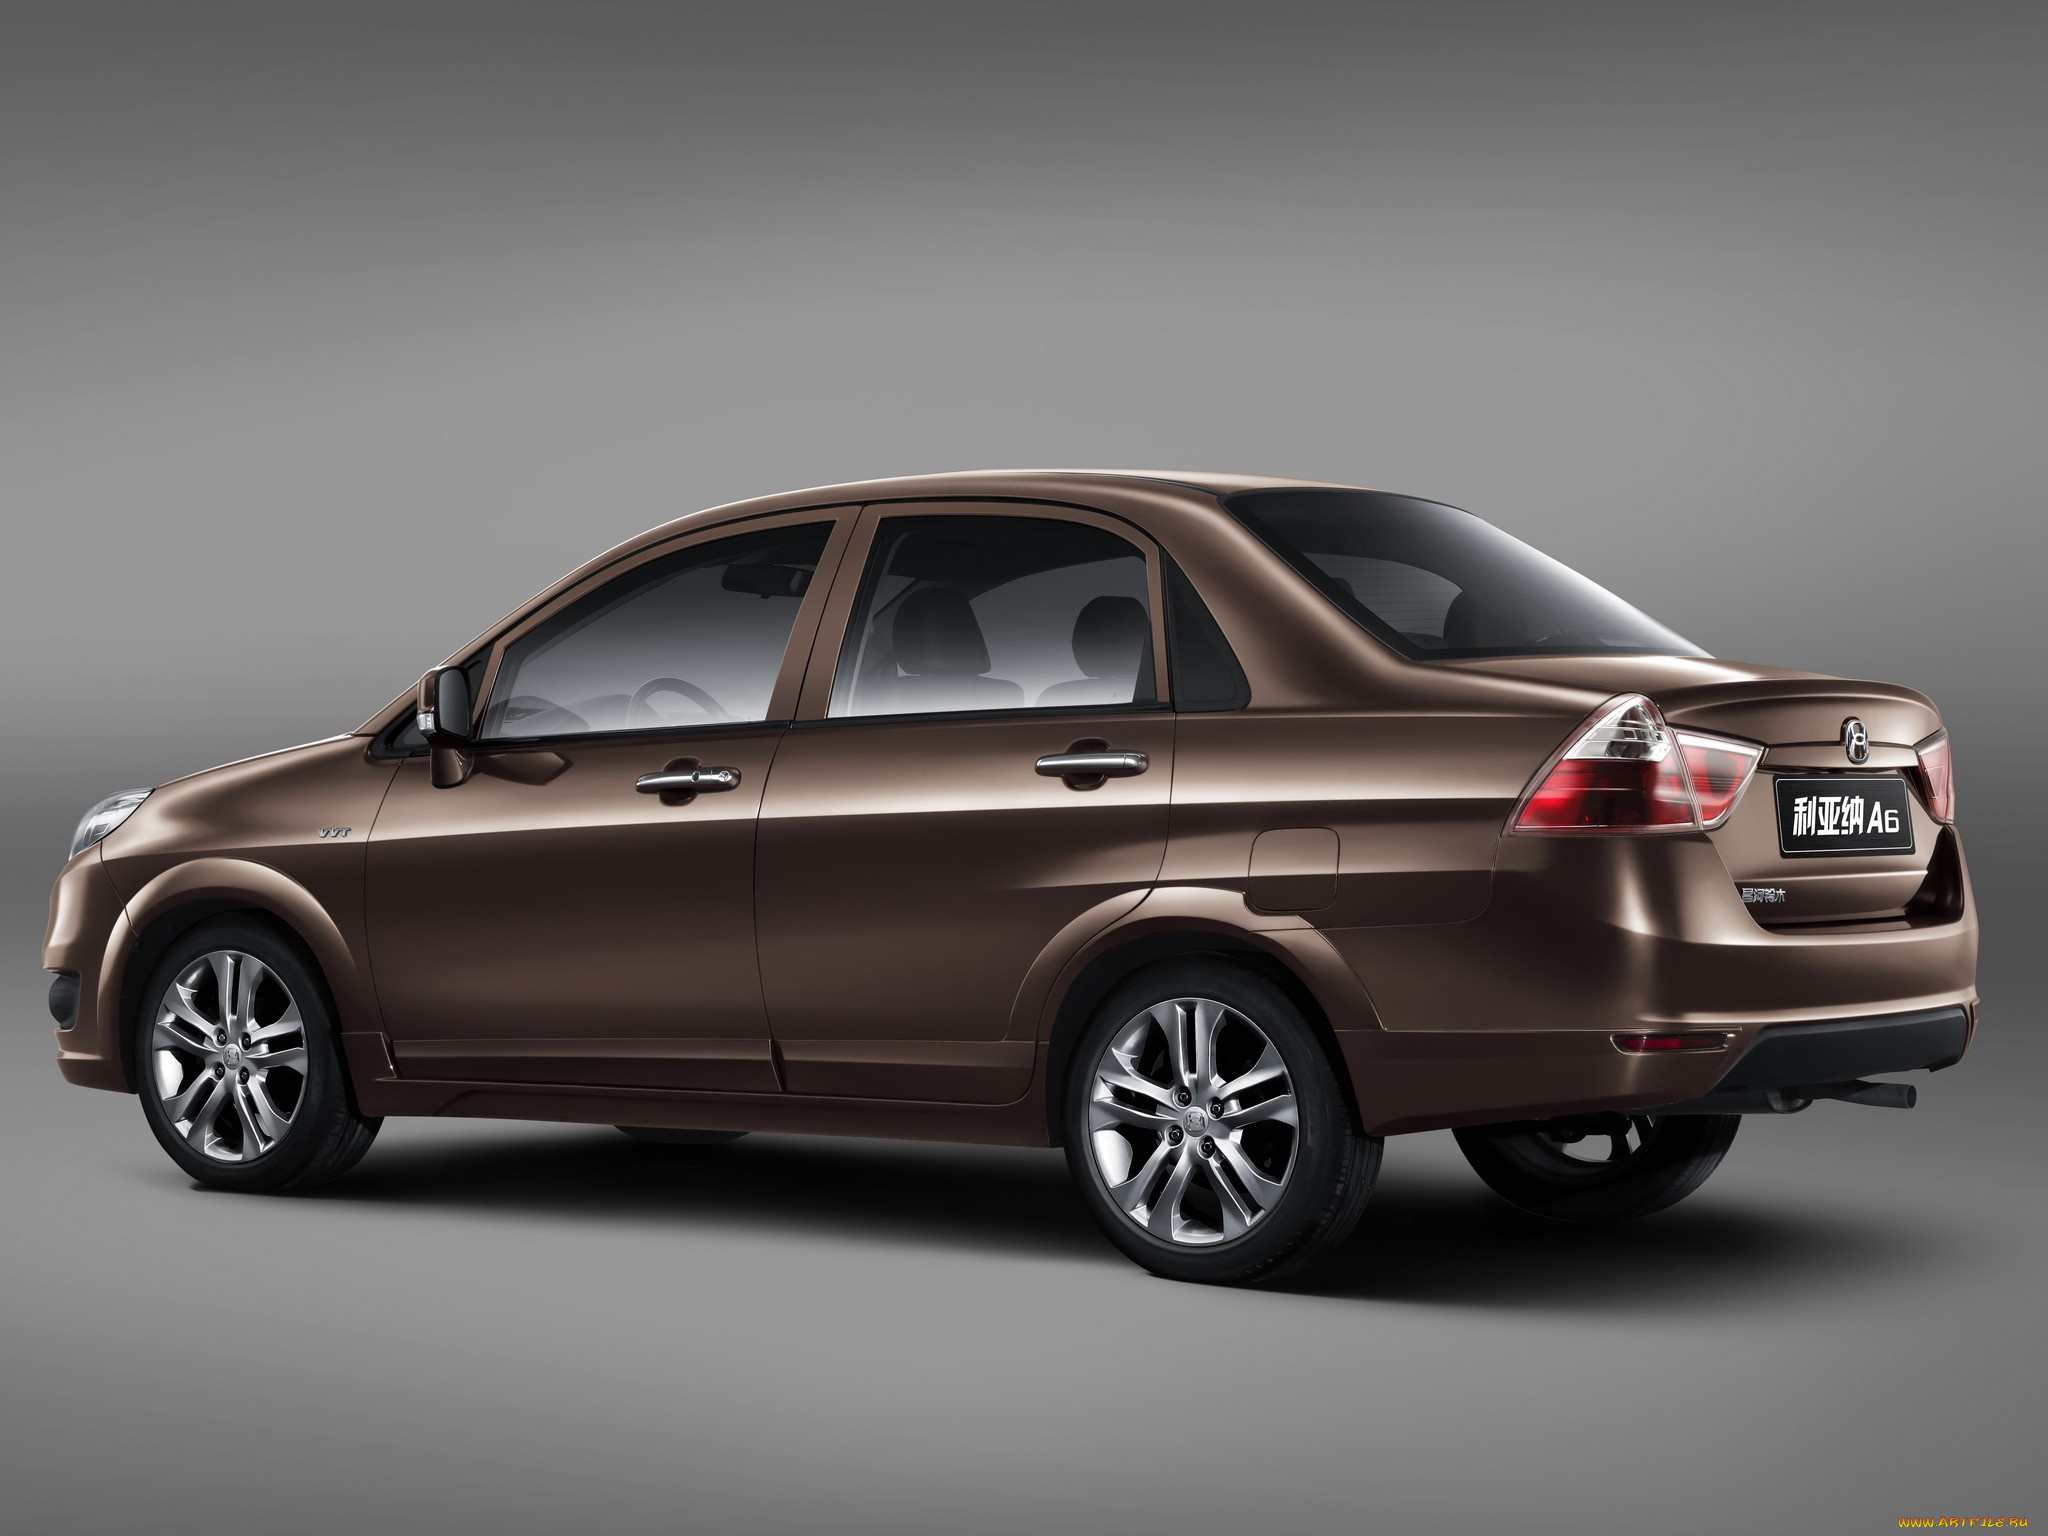 автомобили, changfeng, коричневый, 2013, г, sedan, liana, a6, changhe